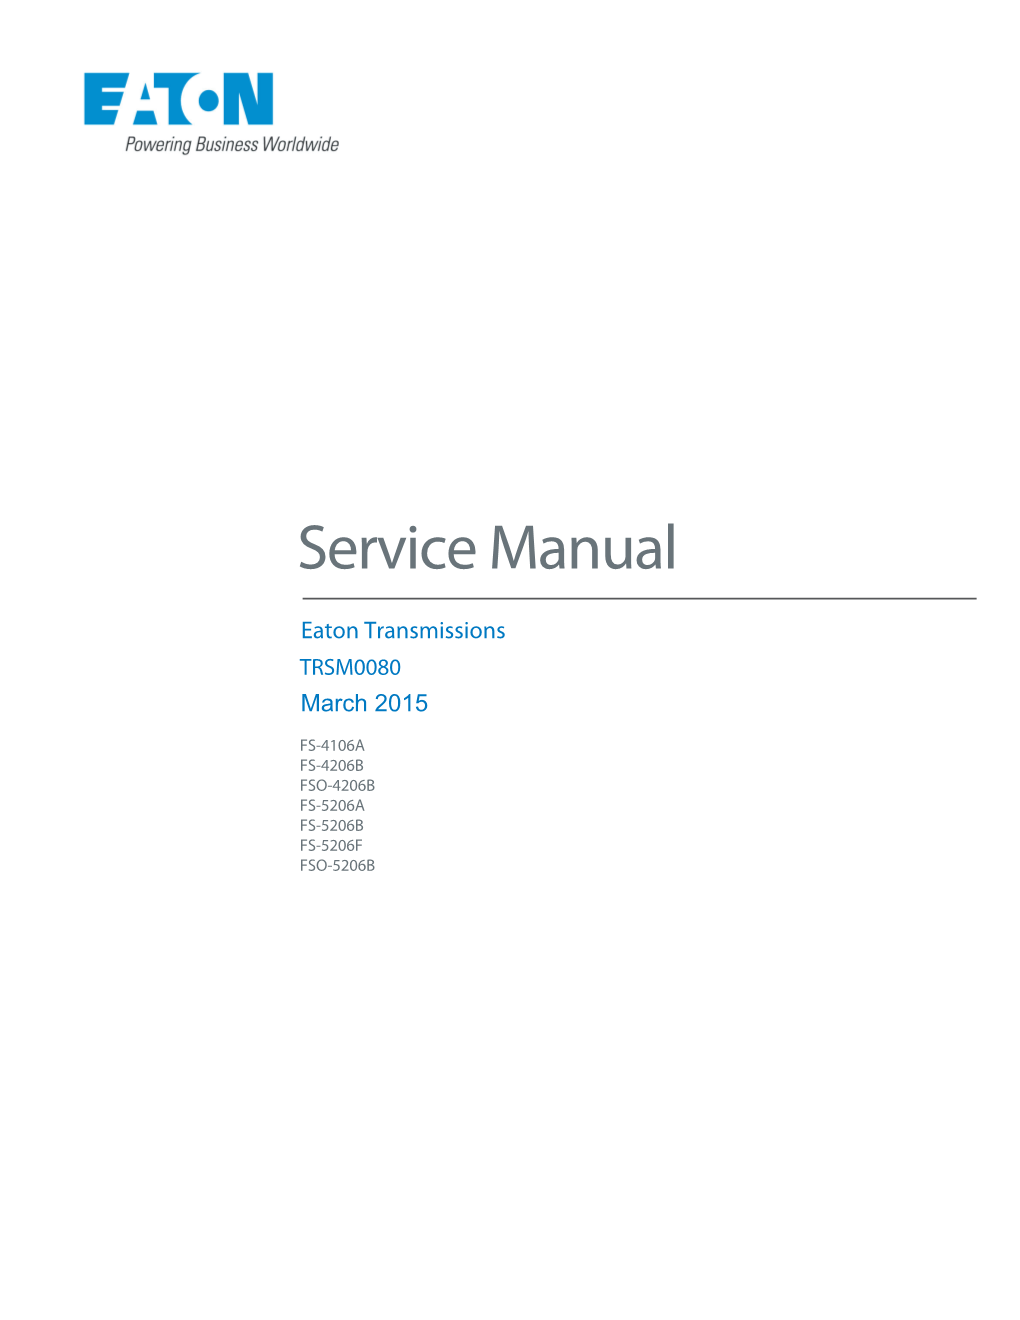 FC Service Manual